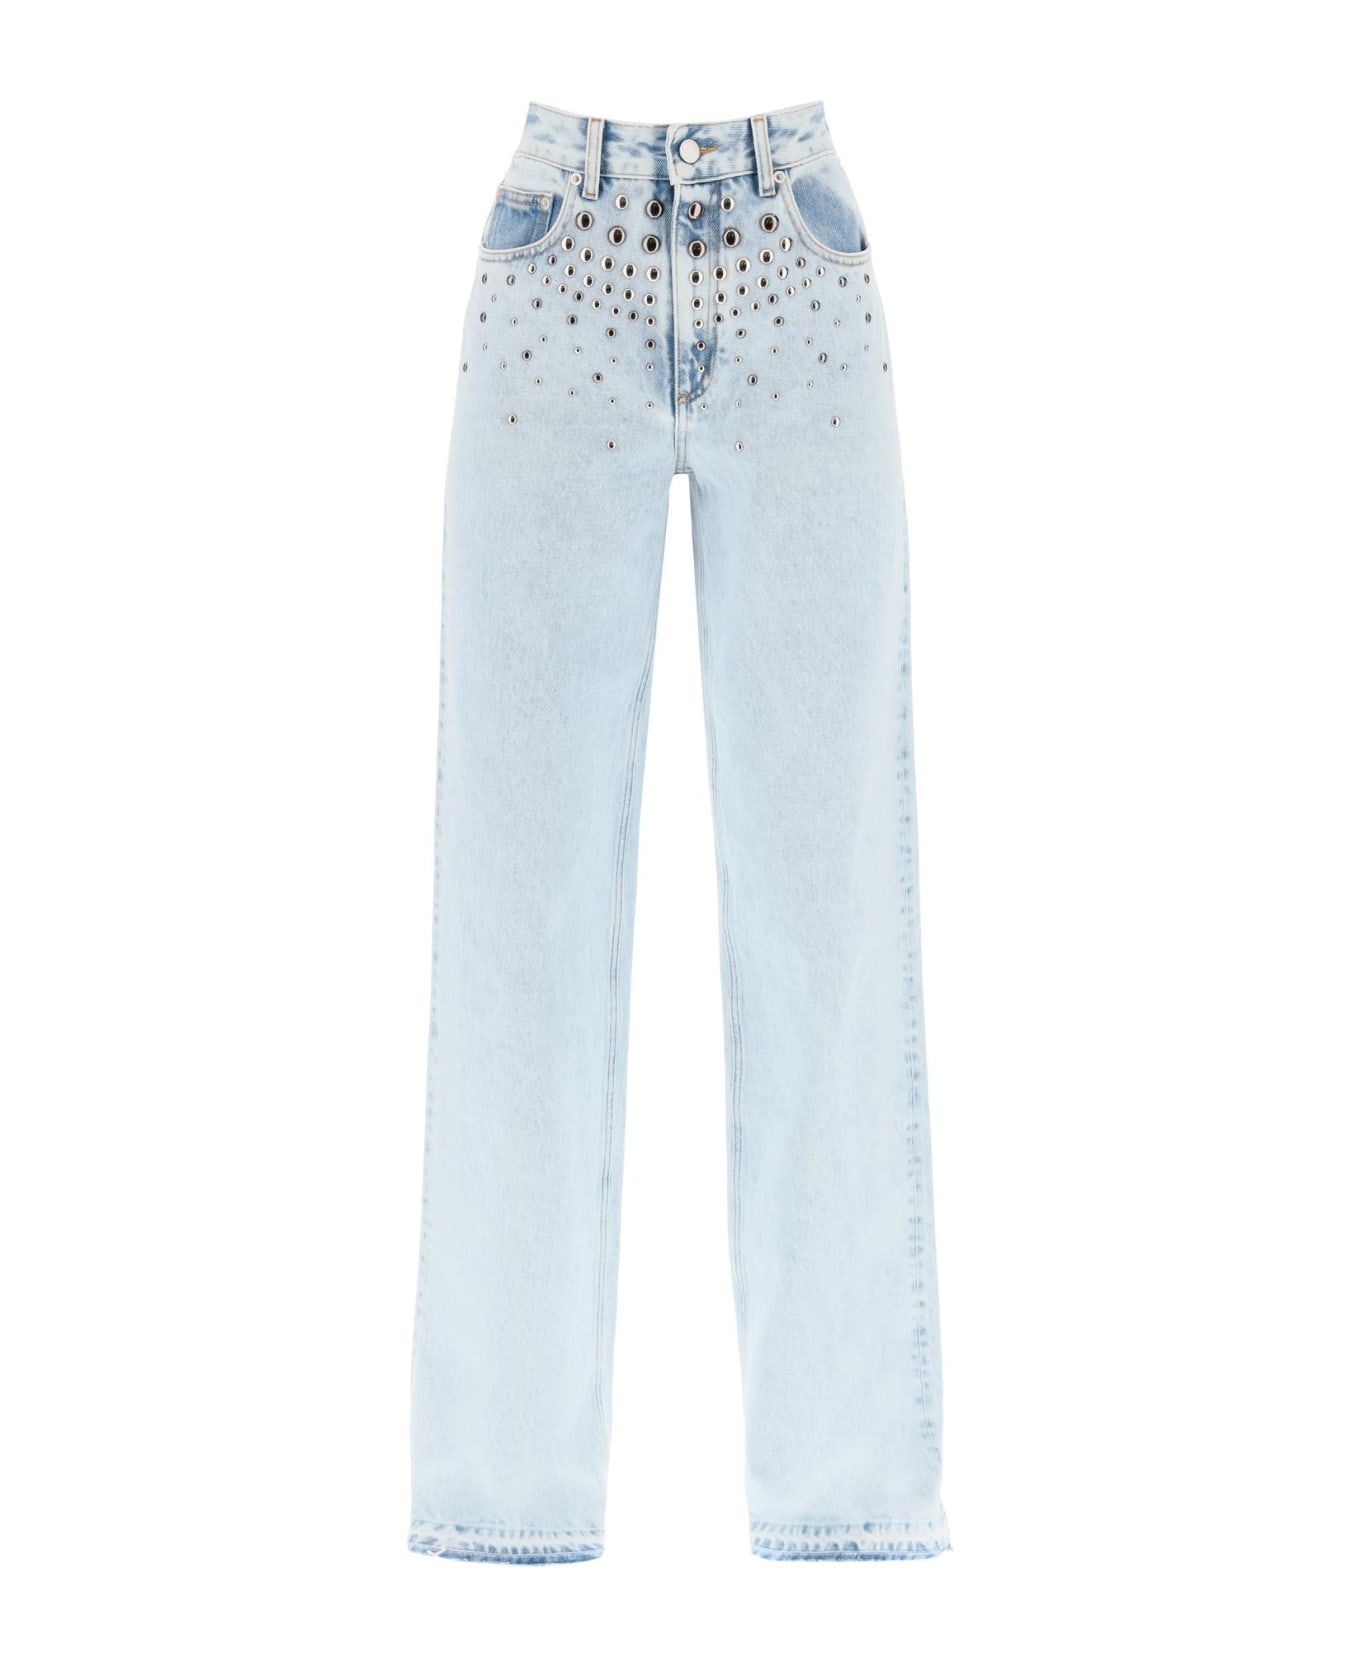 Alessandra Rich Jeans With Studs - LIGHT BLUE (Light blue)